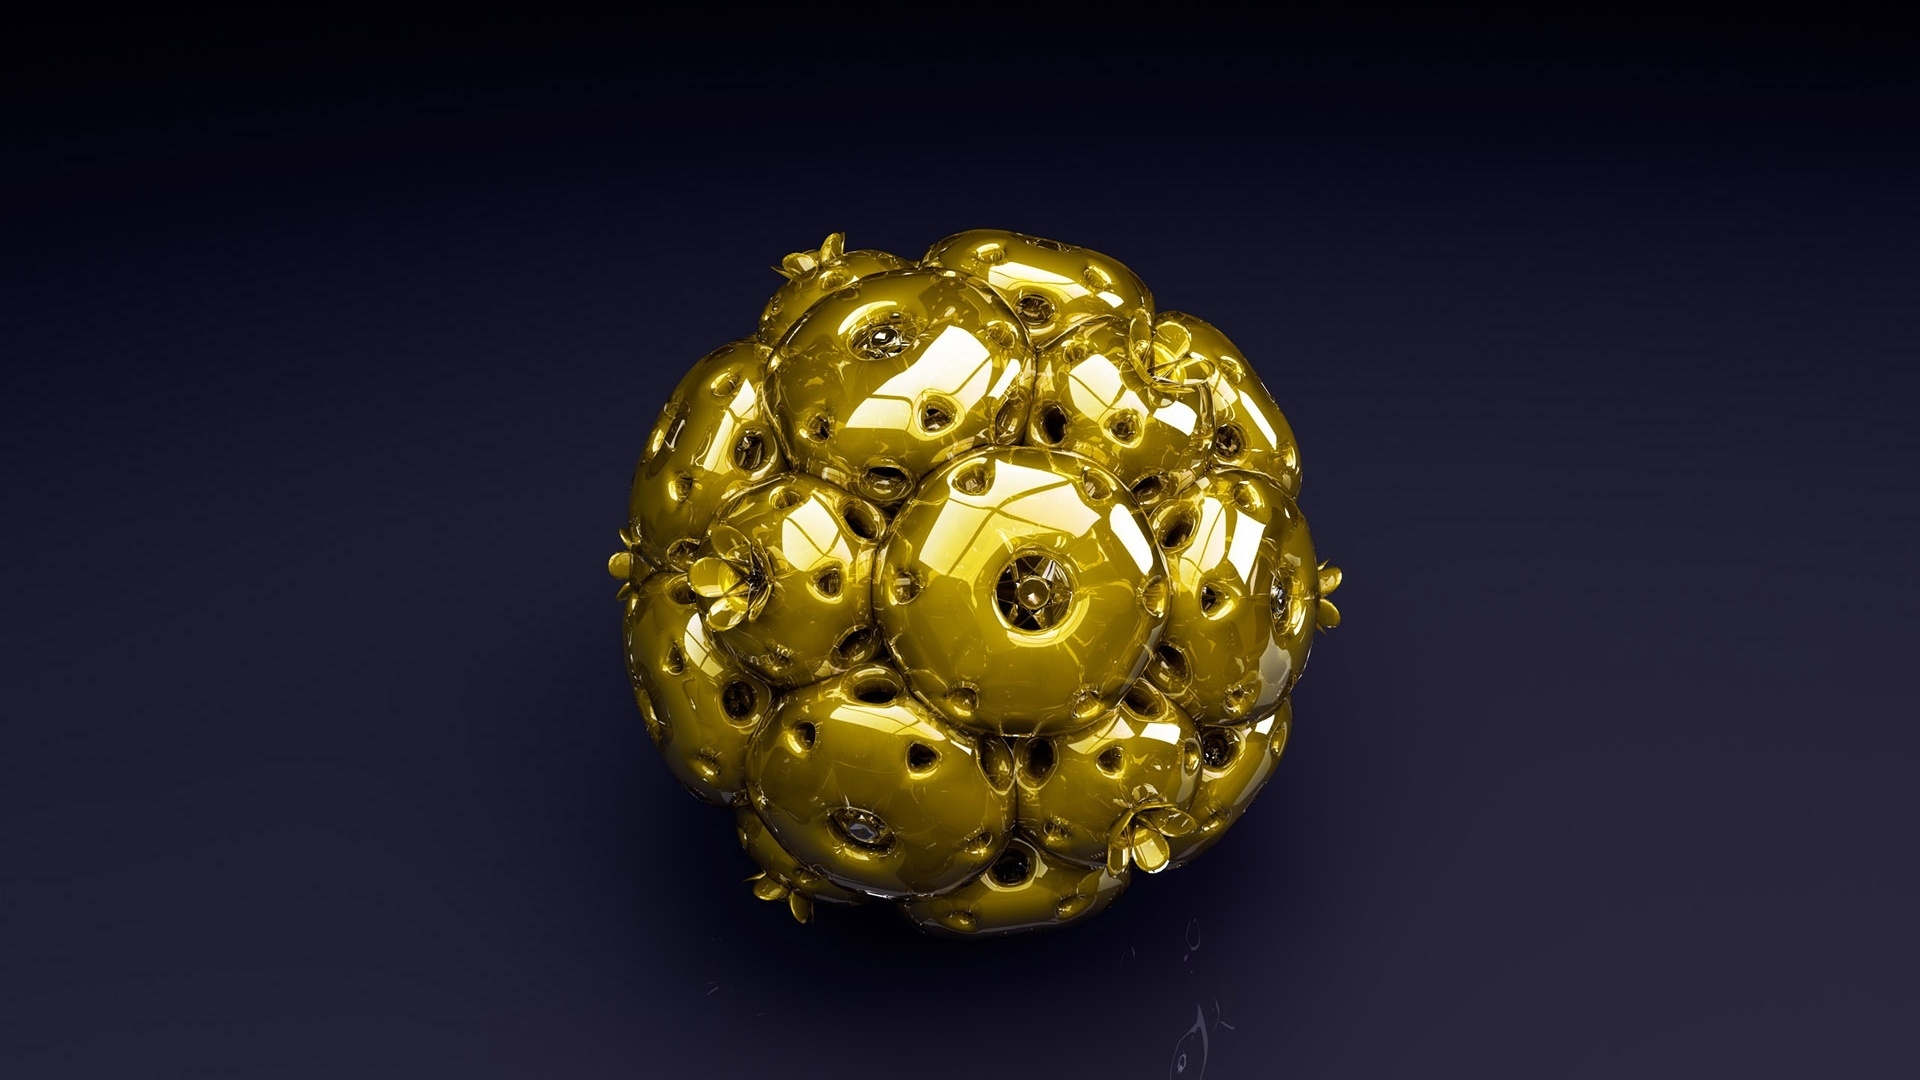 Gold Ball for 1920 x 1080 HDTV 1080p resolution